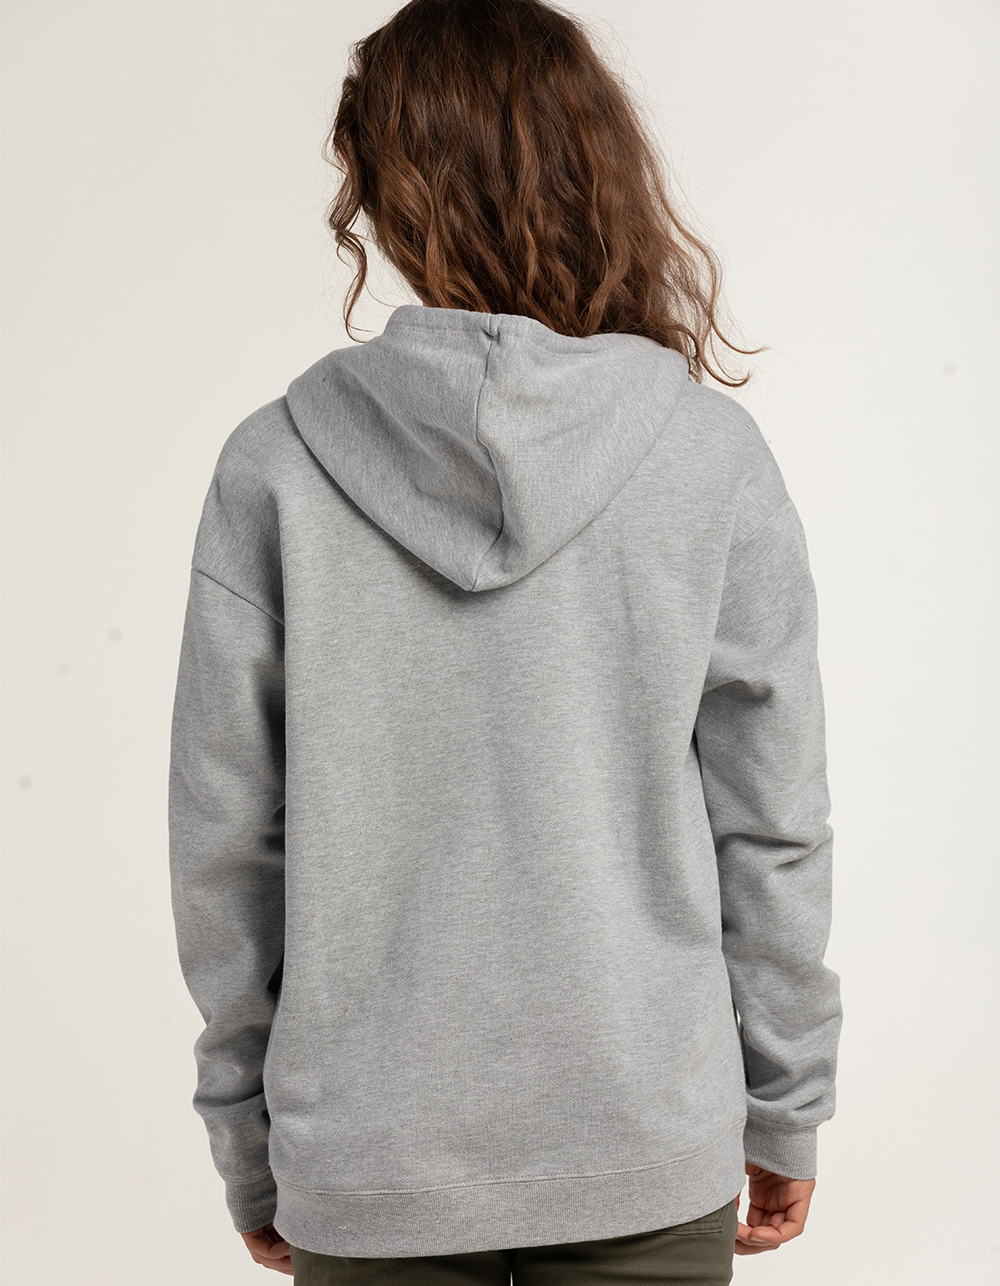 Women's oversized Slippery Rock University gray hoodie sweatshirt size large